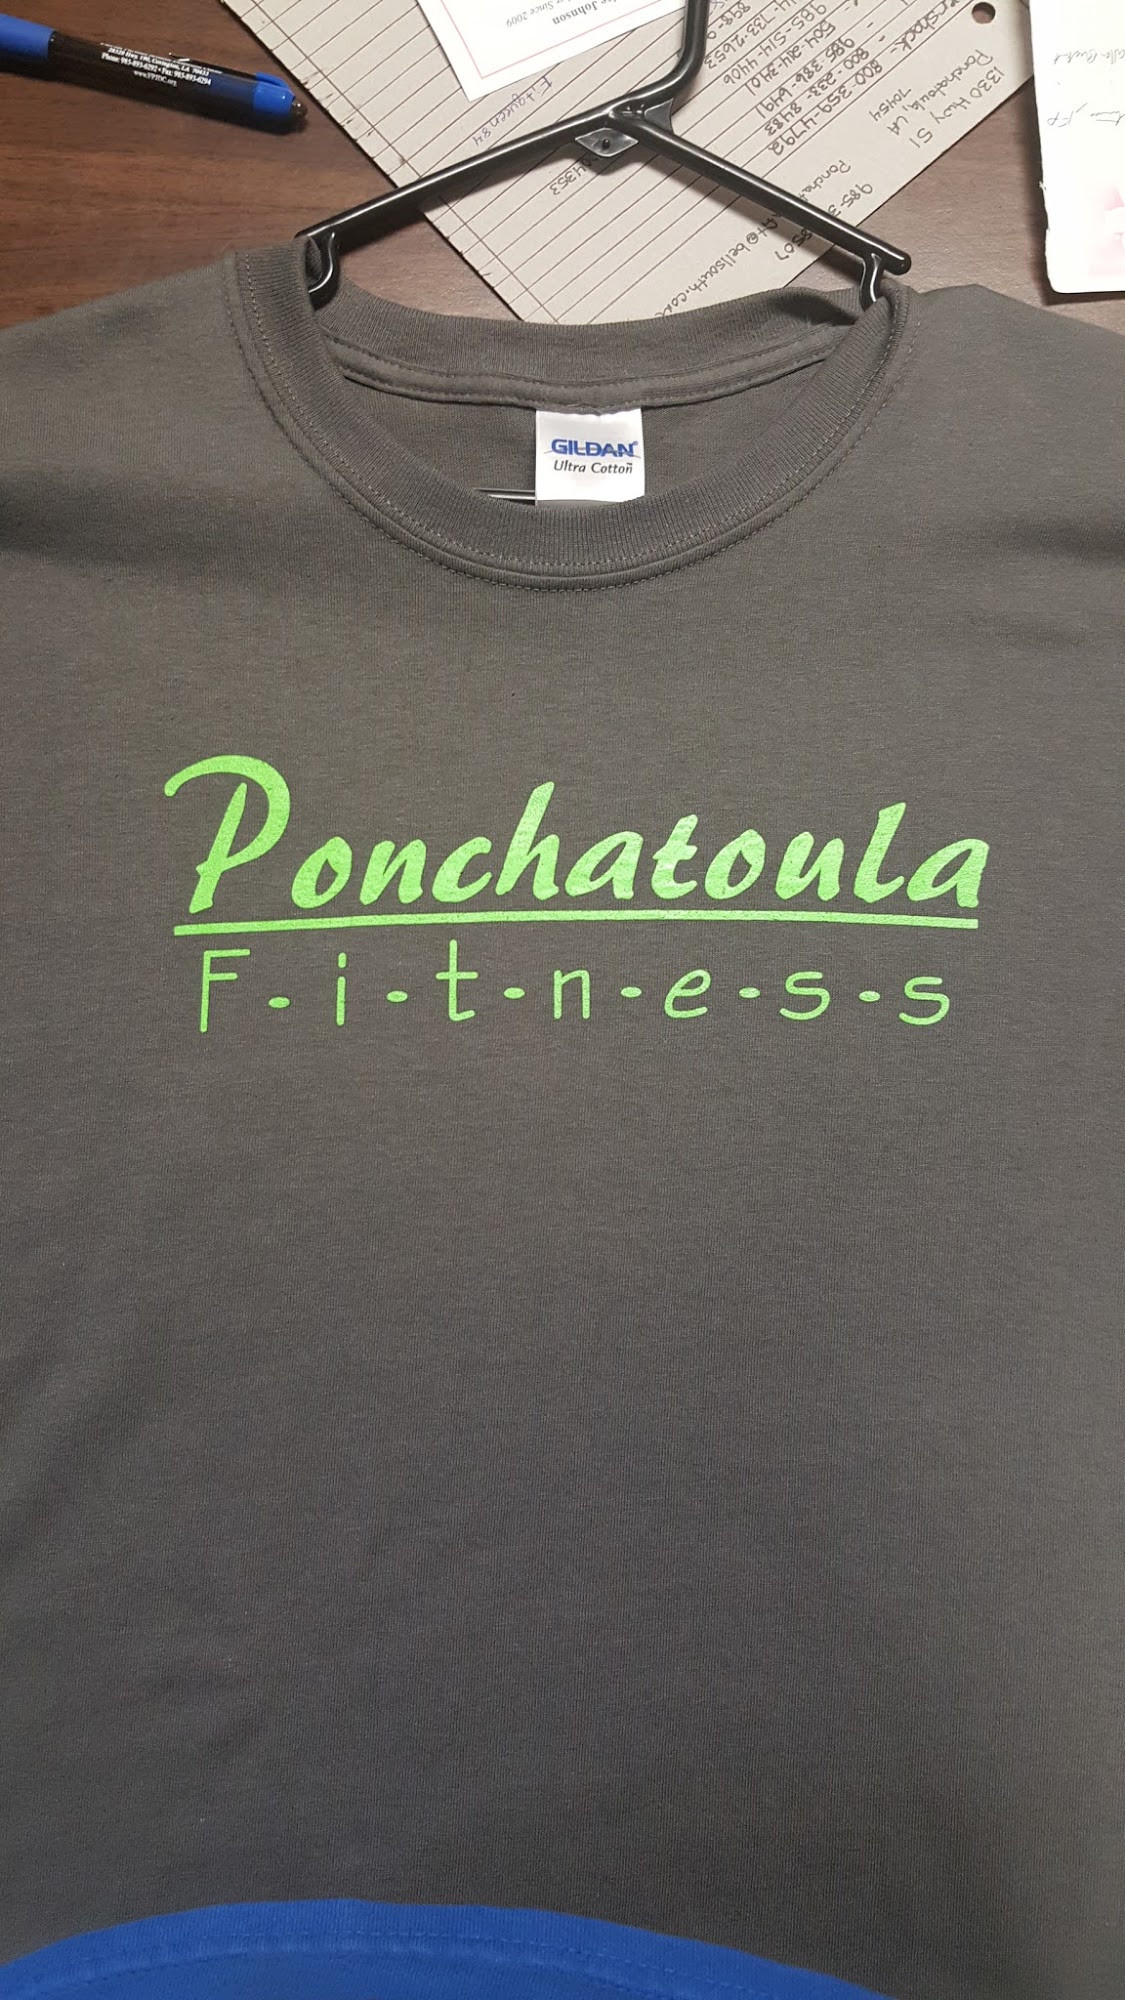 Ponchatoula Fitness Center